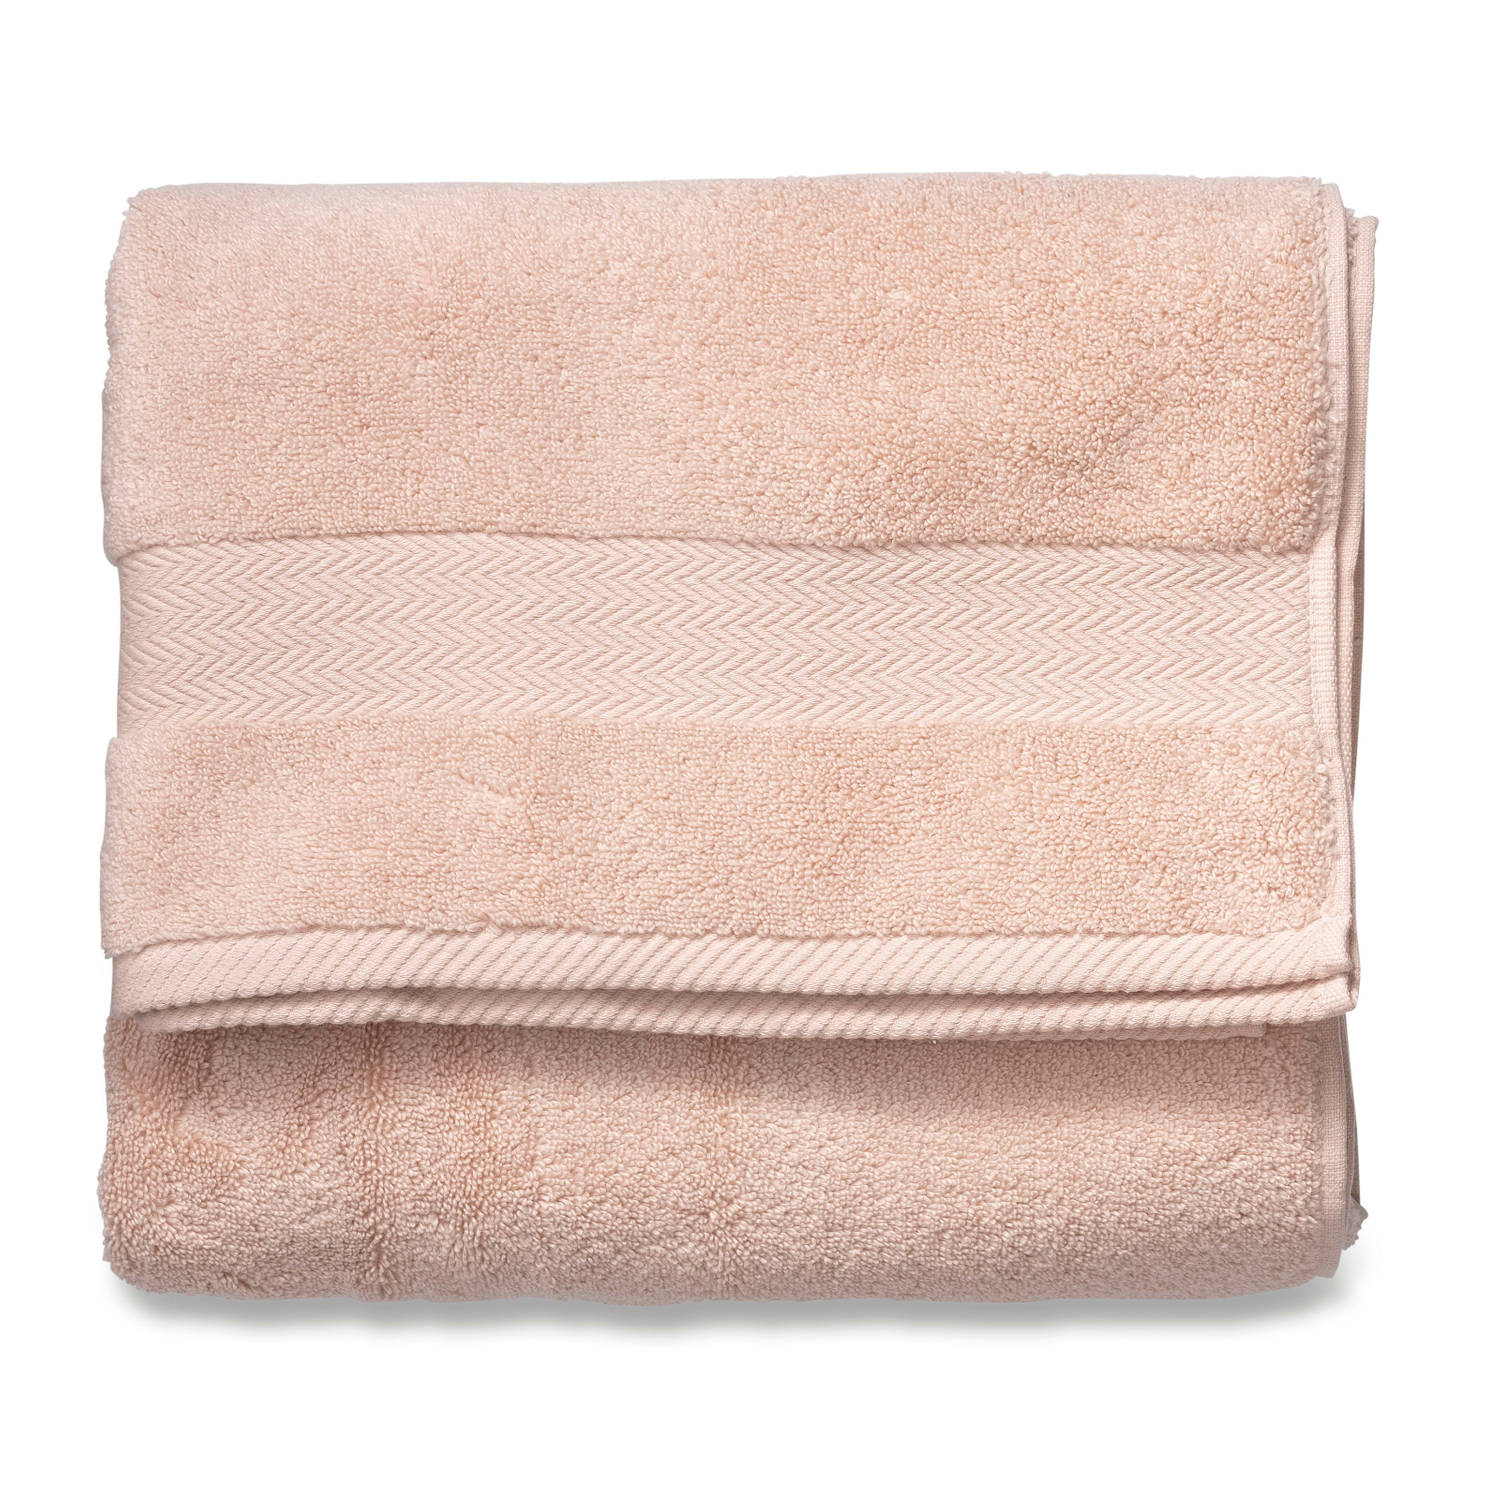 In hoeveelheid Puur Speel Blokker handdoek 600g - roze - 70x140 cm | Blokker